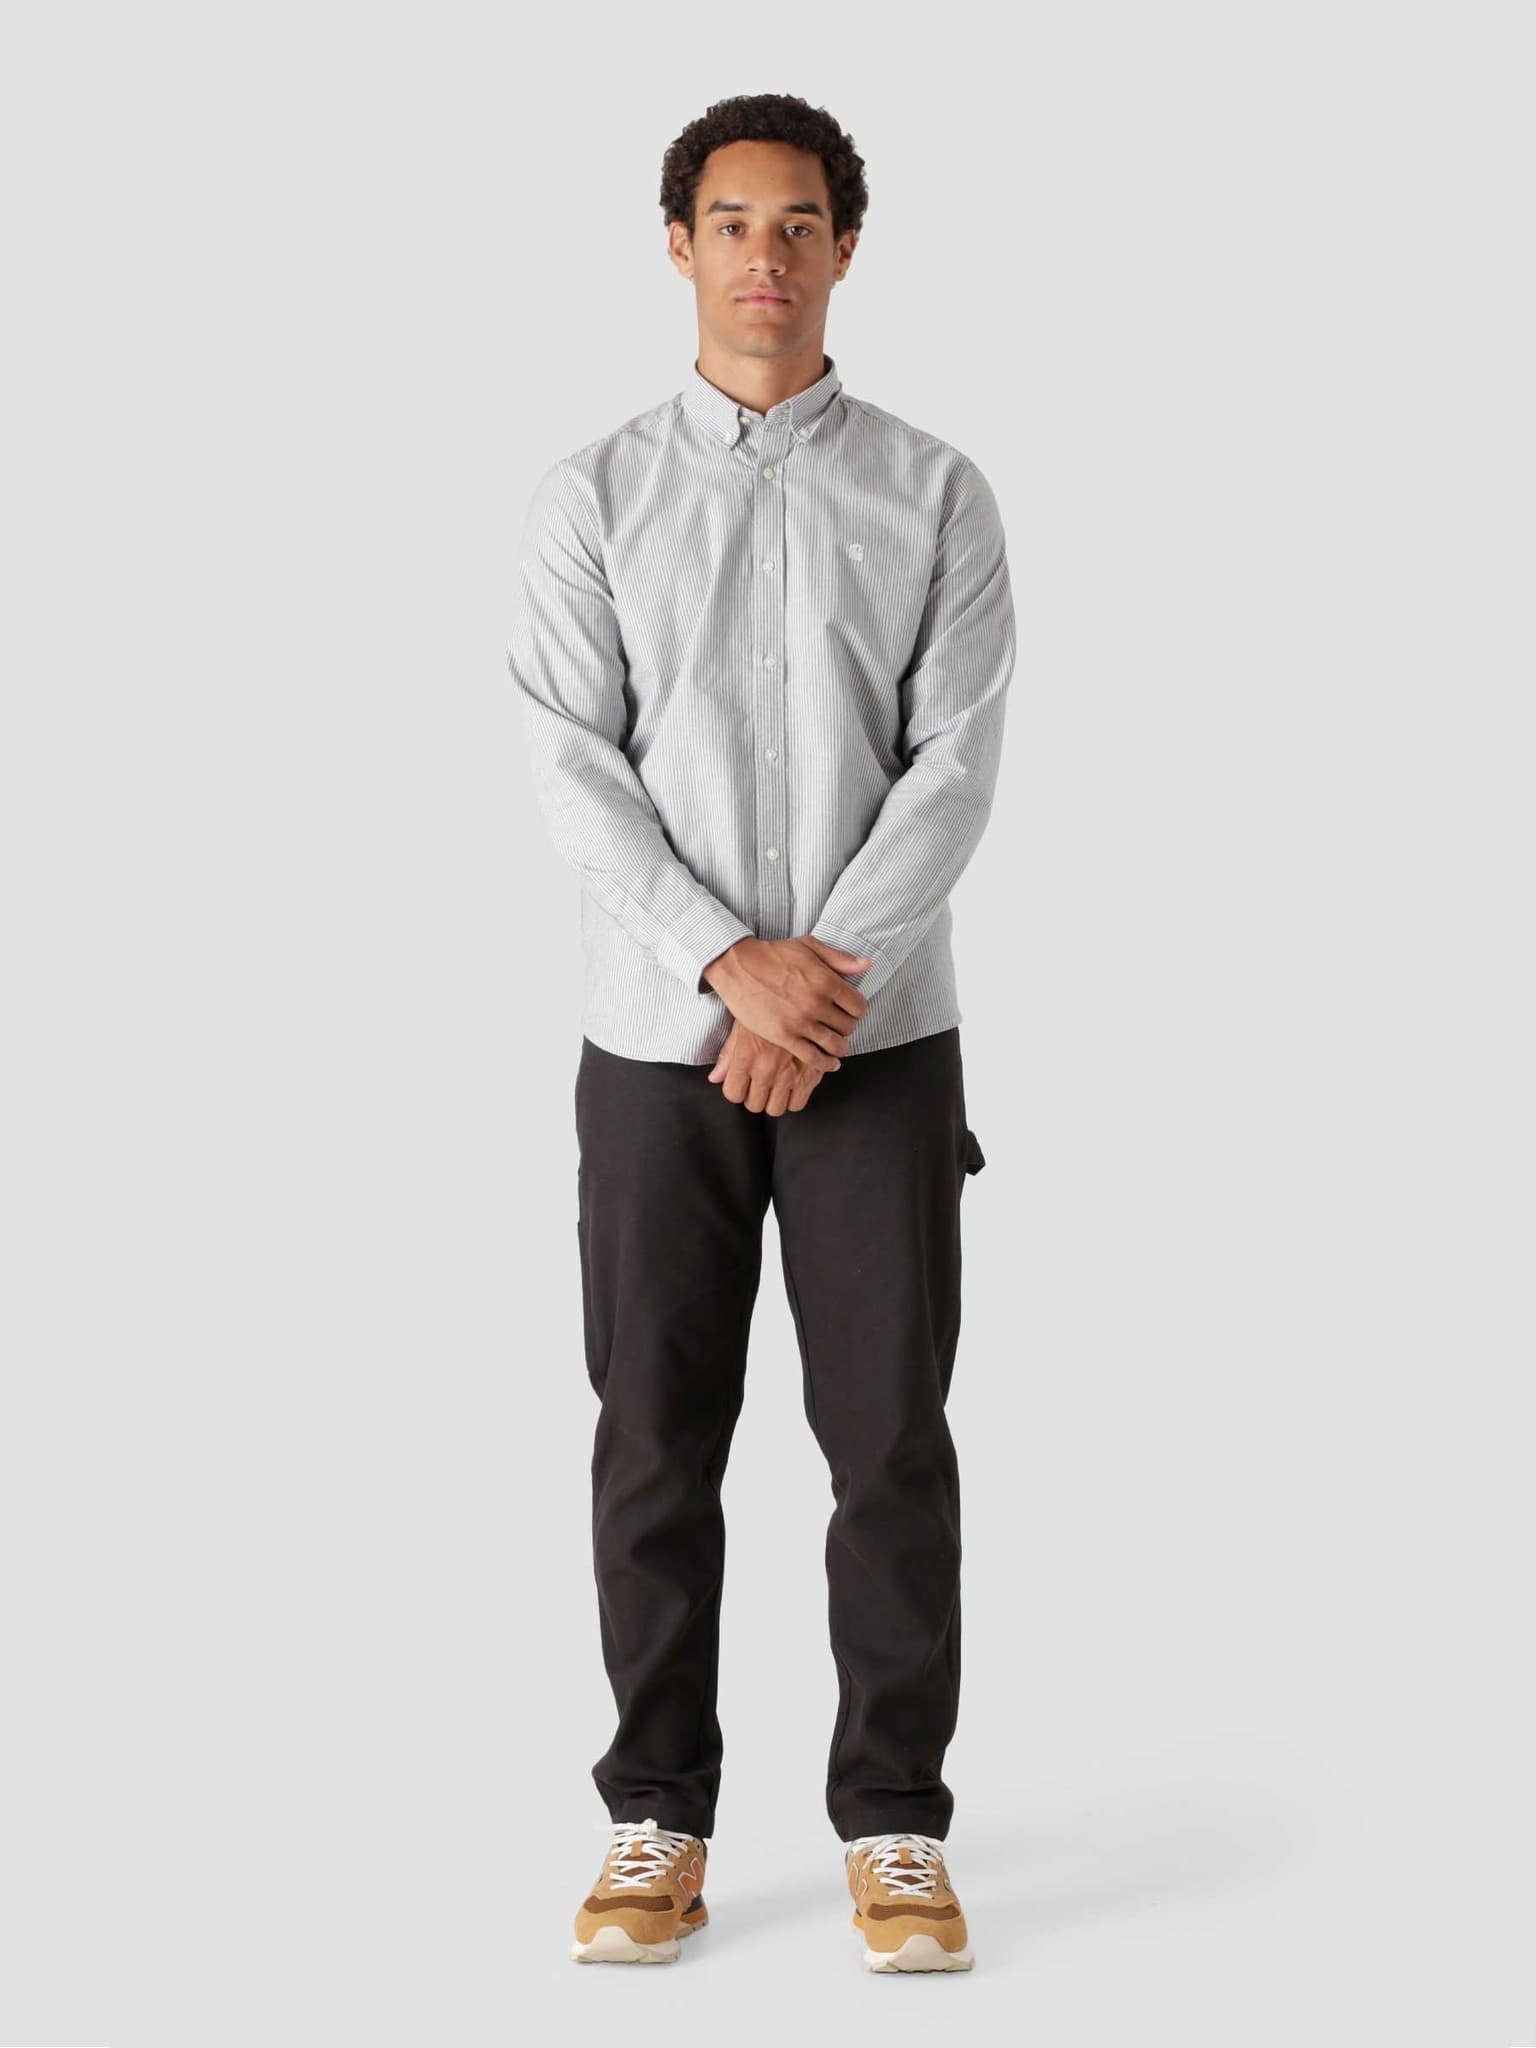 Longsleeve Duffield Shirt Duffield Stripe Black White I025245-8990